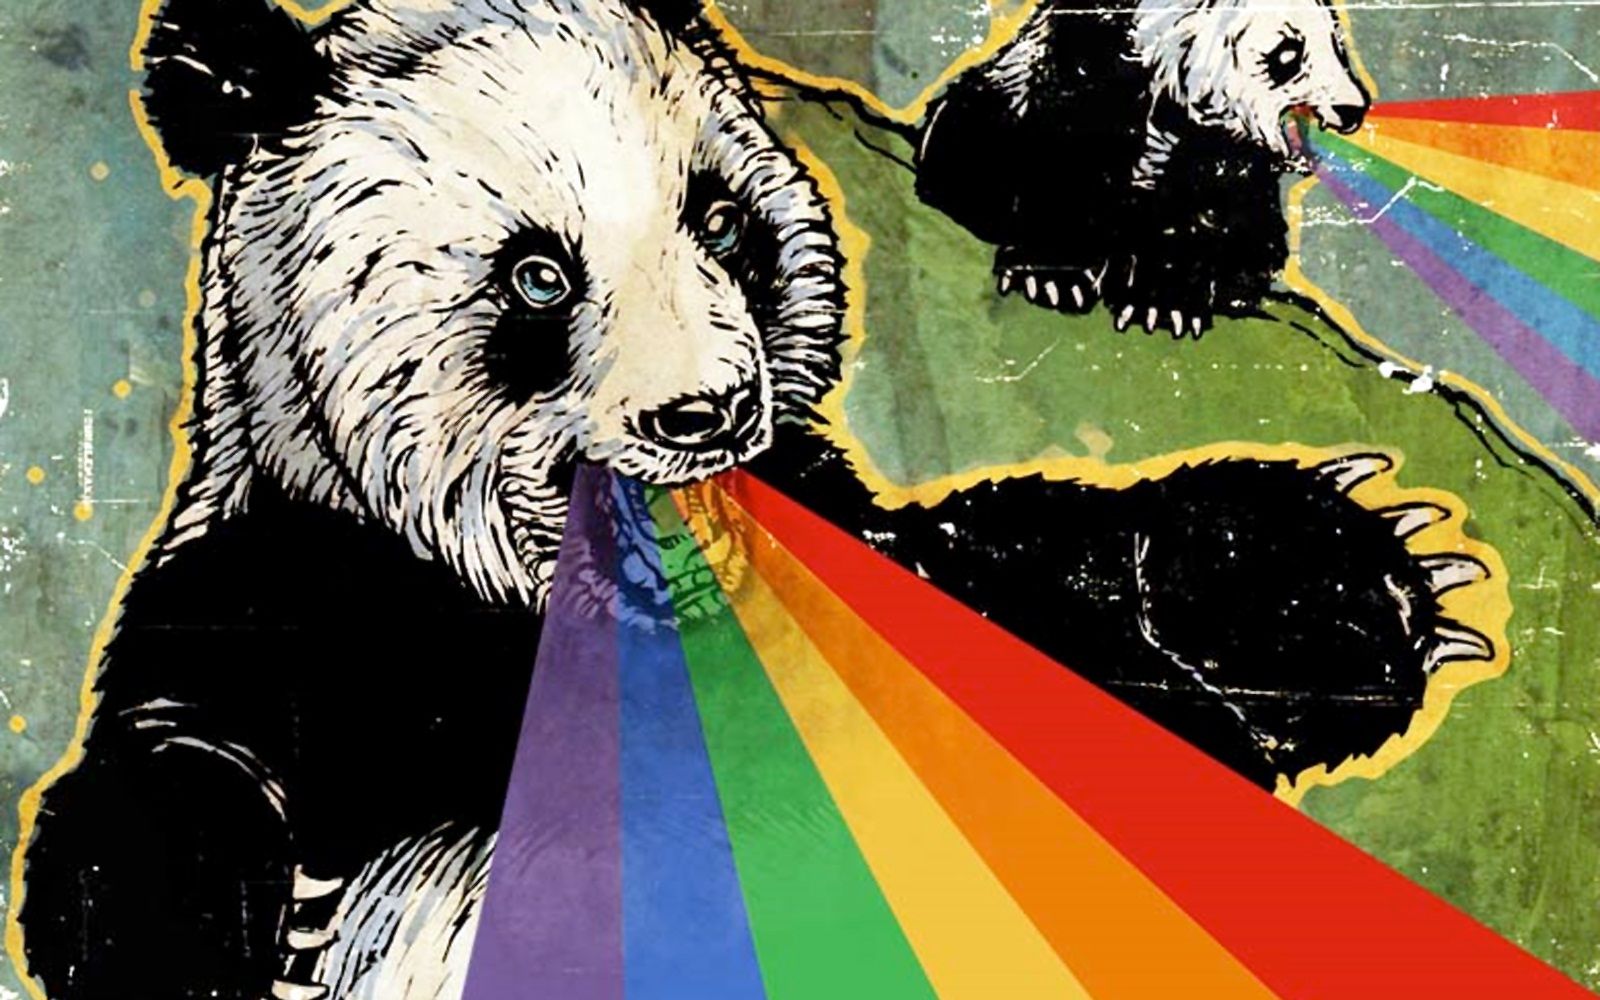 pandas puking rainbows wallpaper anyone?